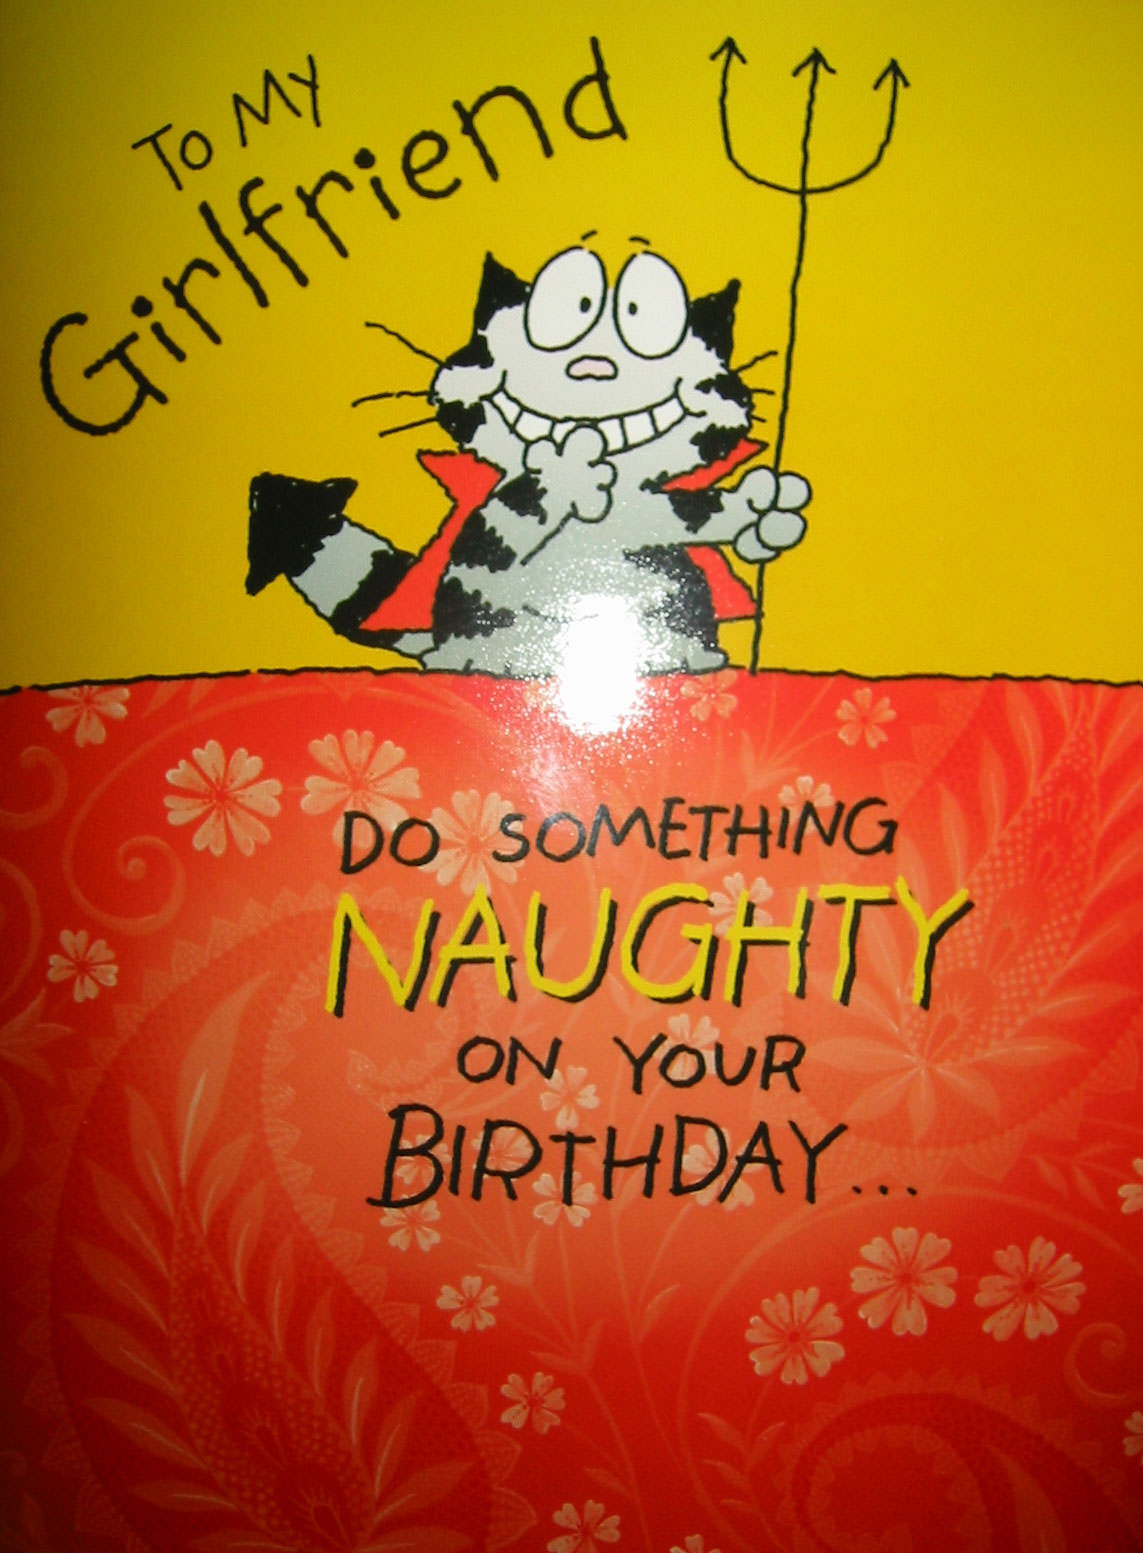 To my girlfriend - do something NAUGHTY on your birthday...